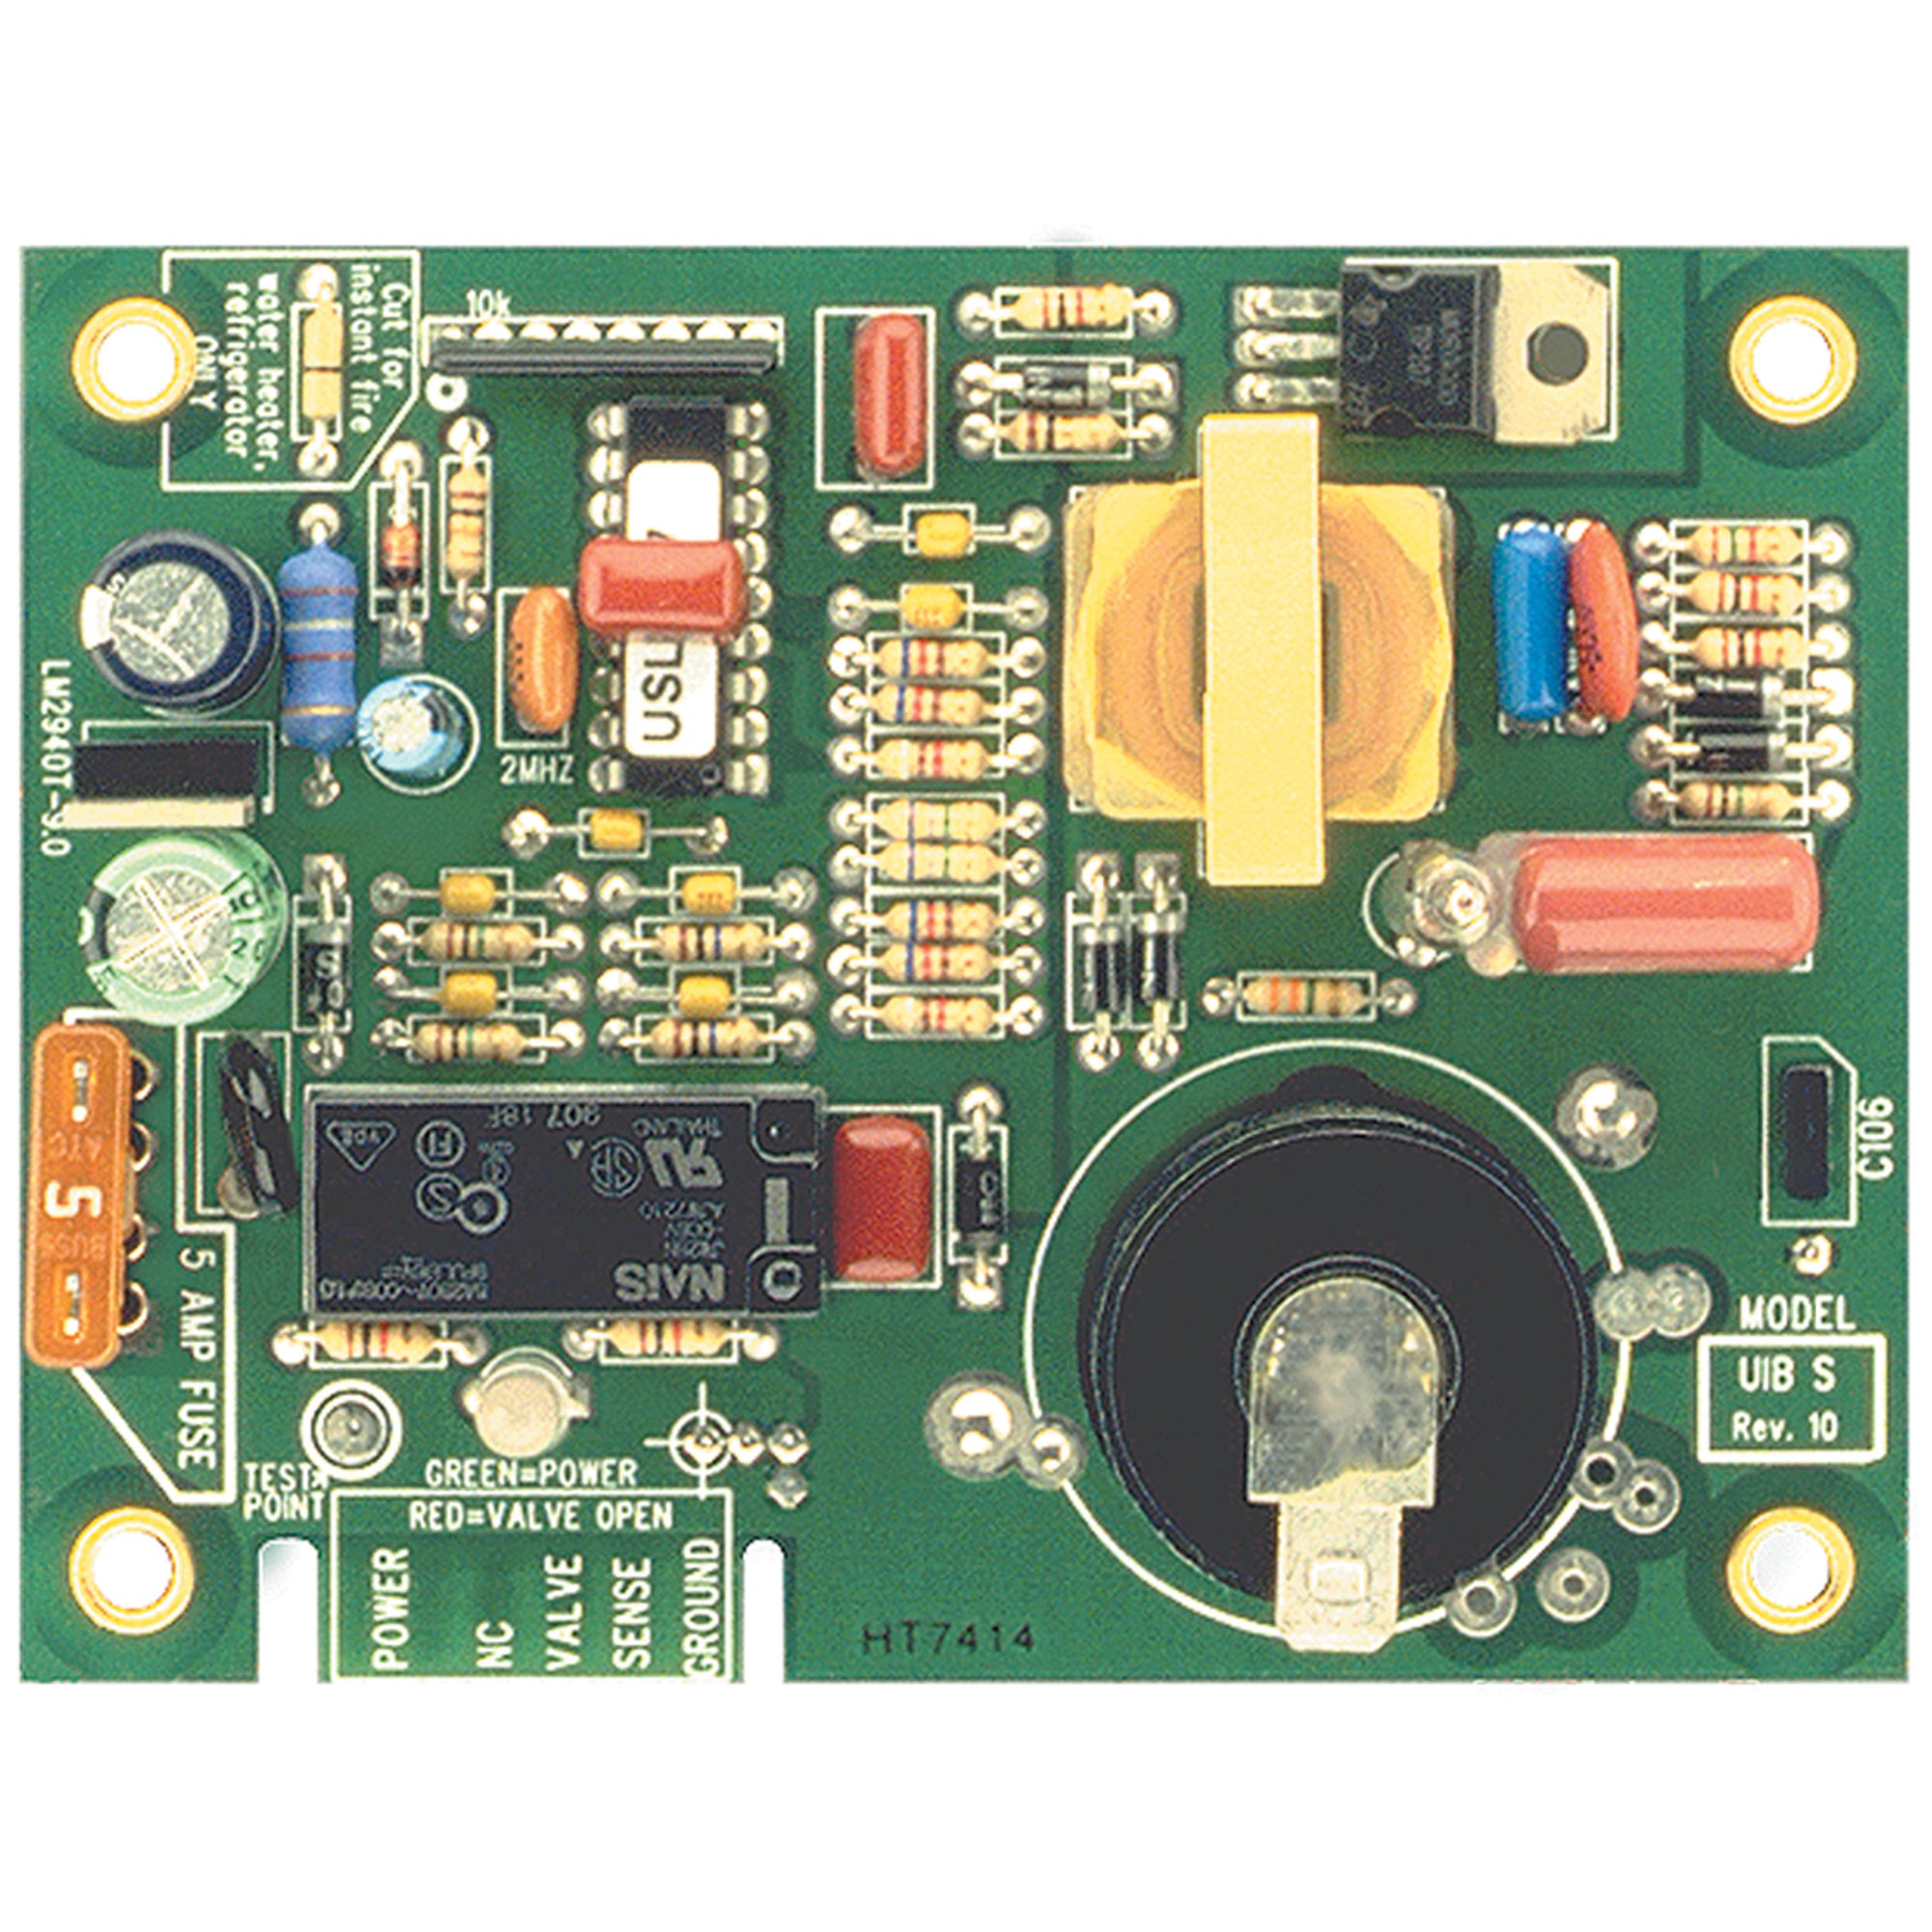 Dinosaur Electronics Ignitor Board - Large, Post